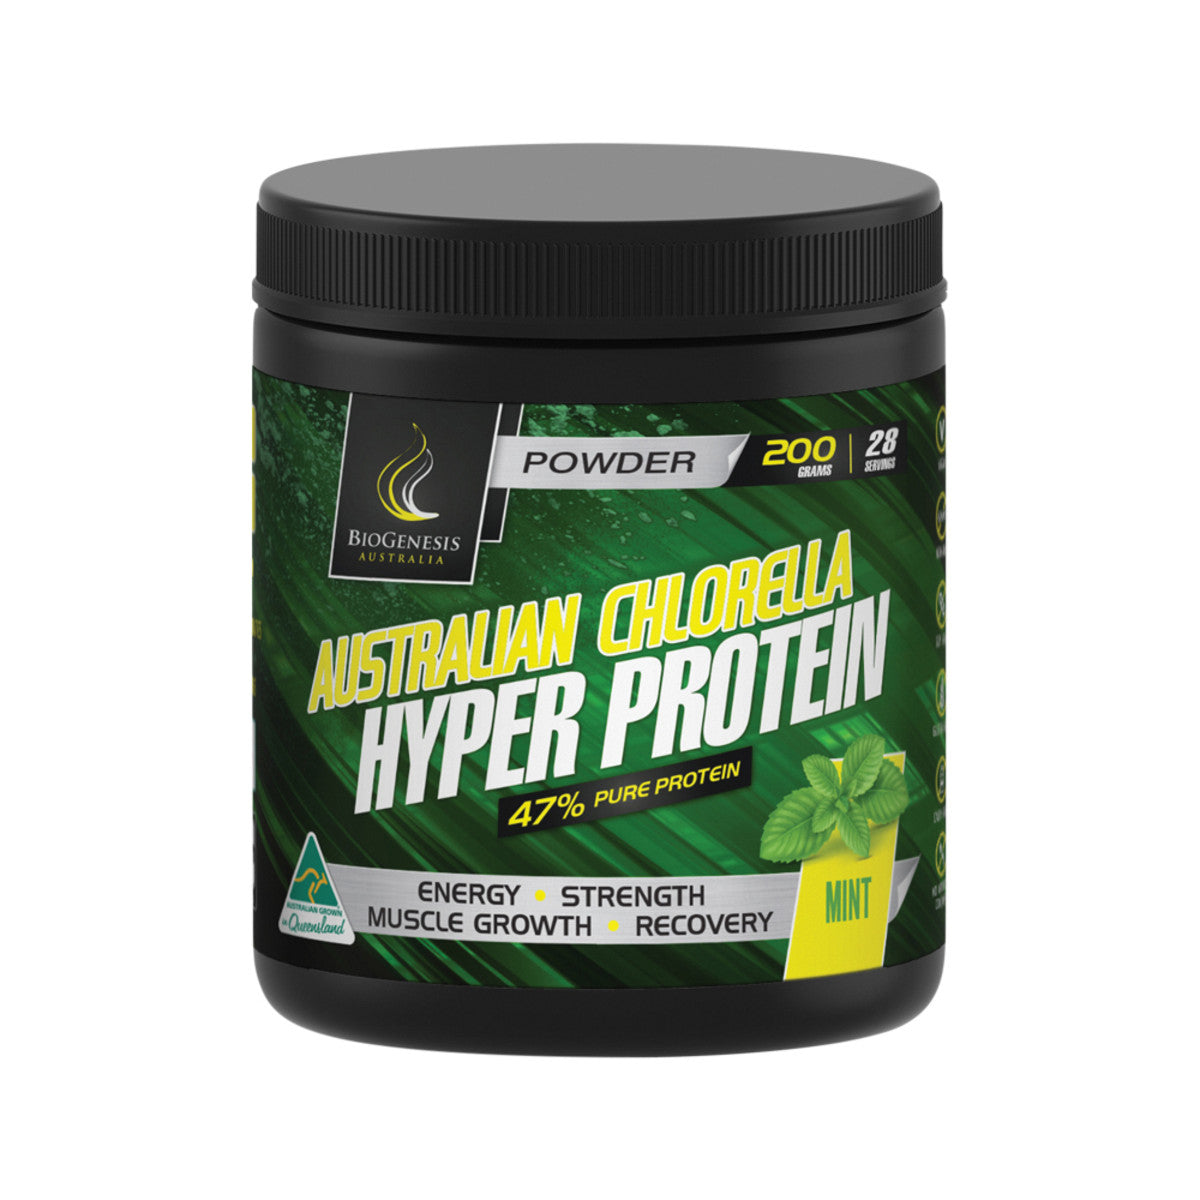 BioGenesis - Australian Chlorella Hyper Protein Mint Powder